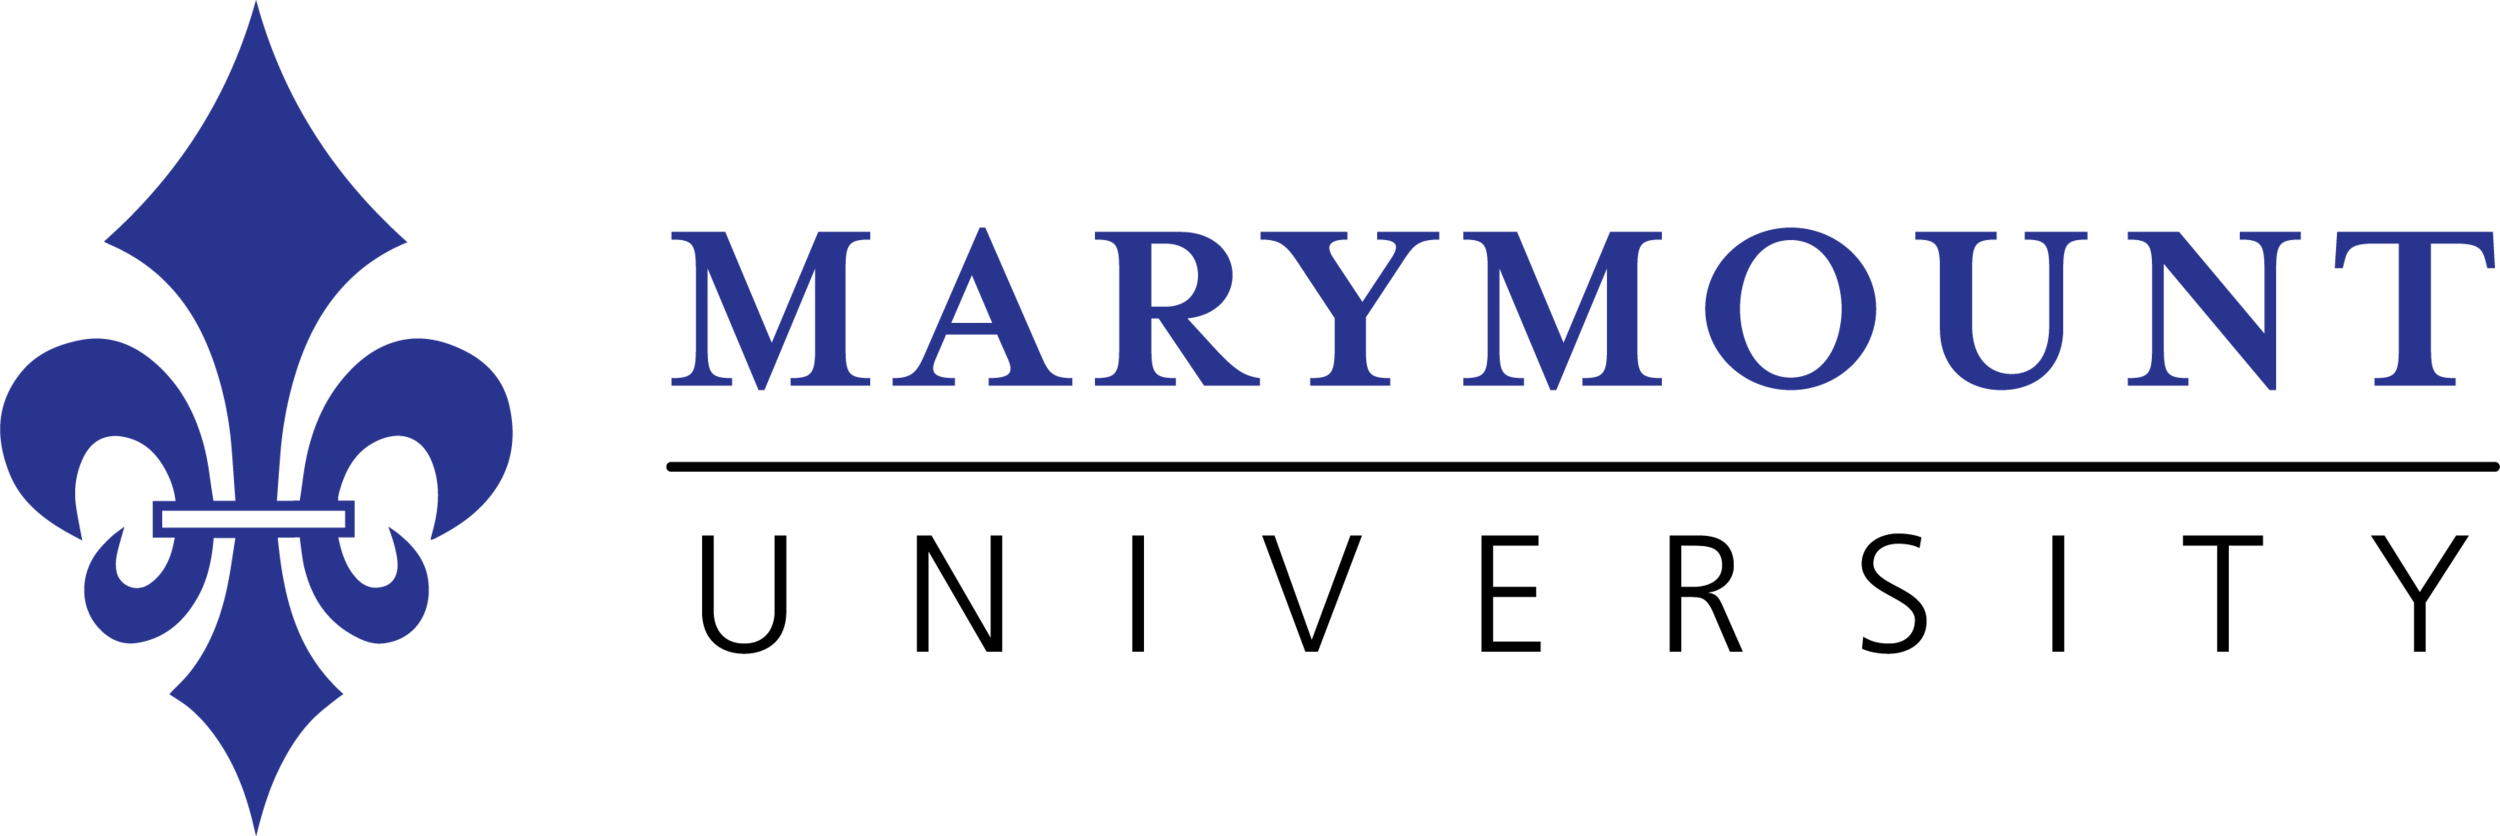 Marymount Univ. лого